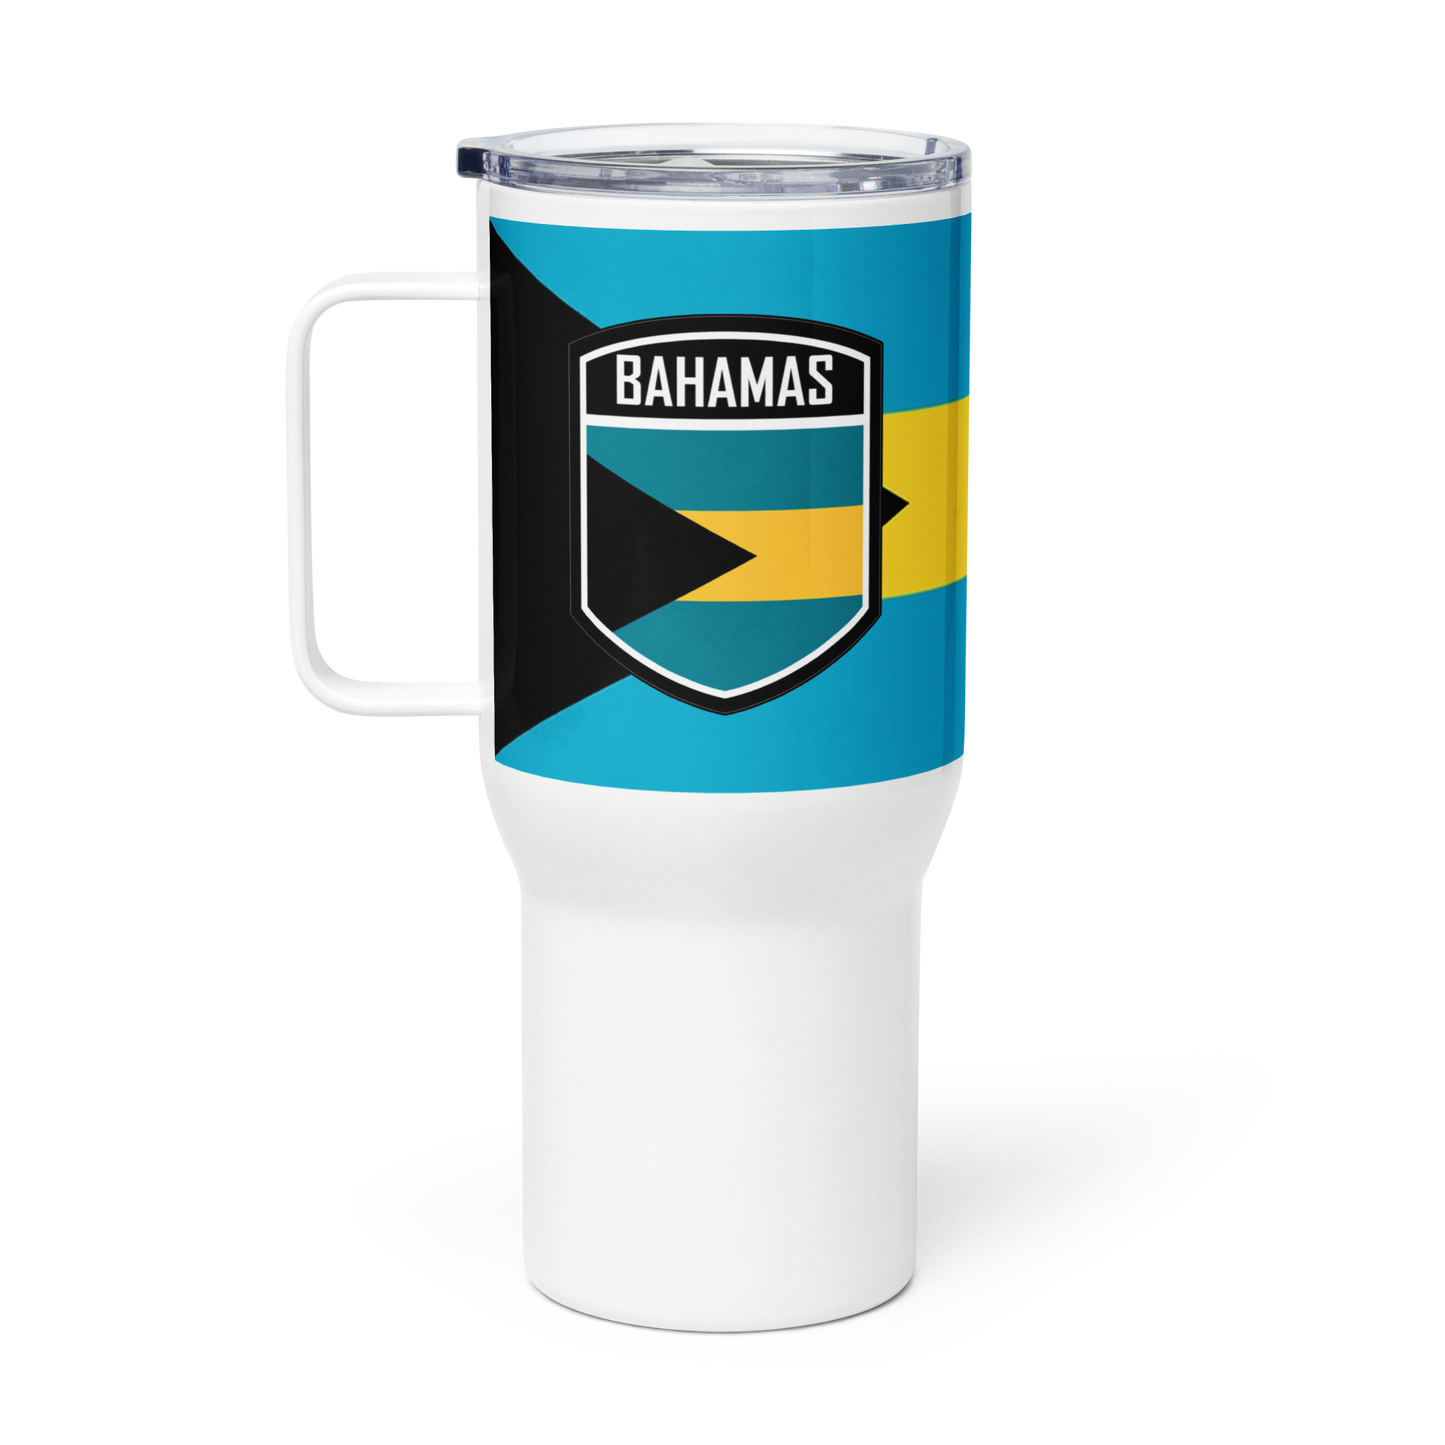 Bahamas Travel mug with a handle